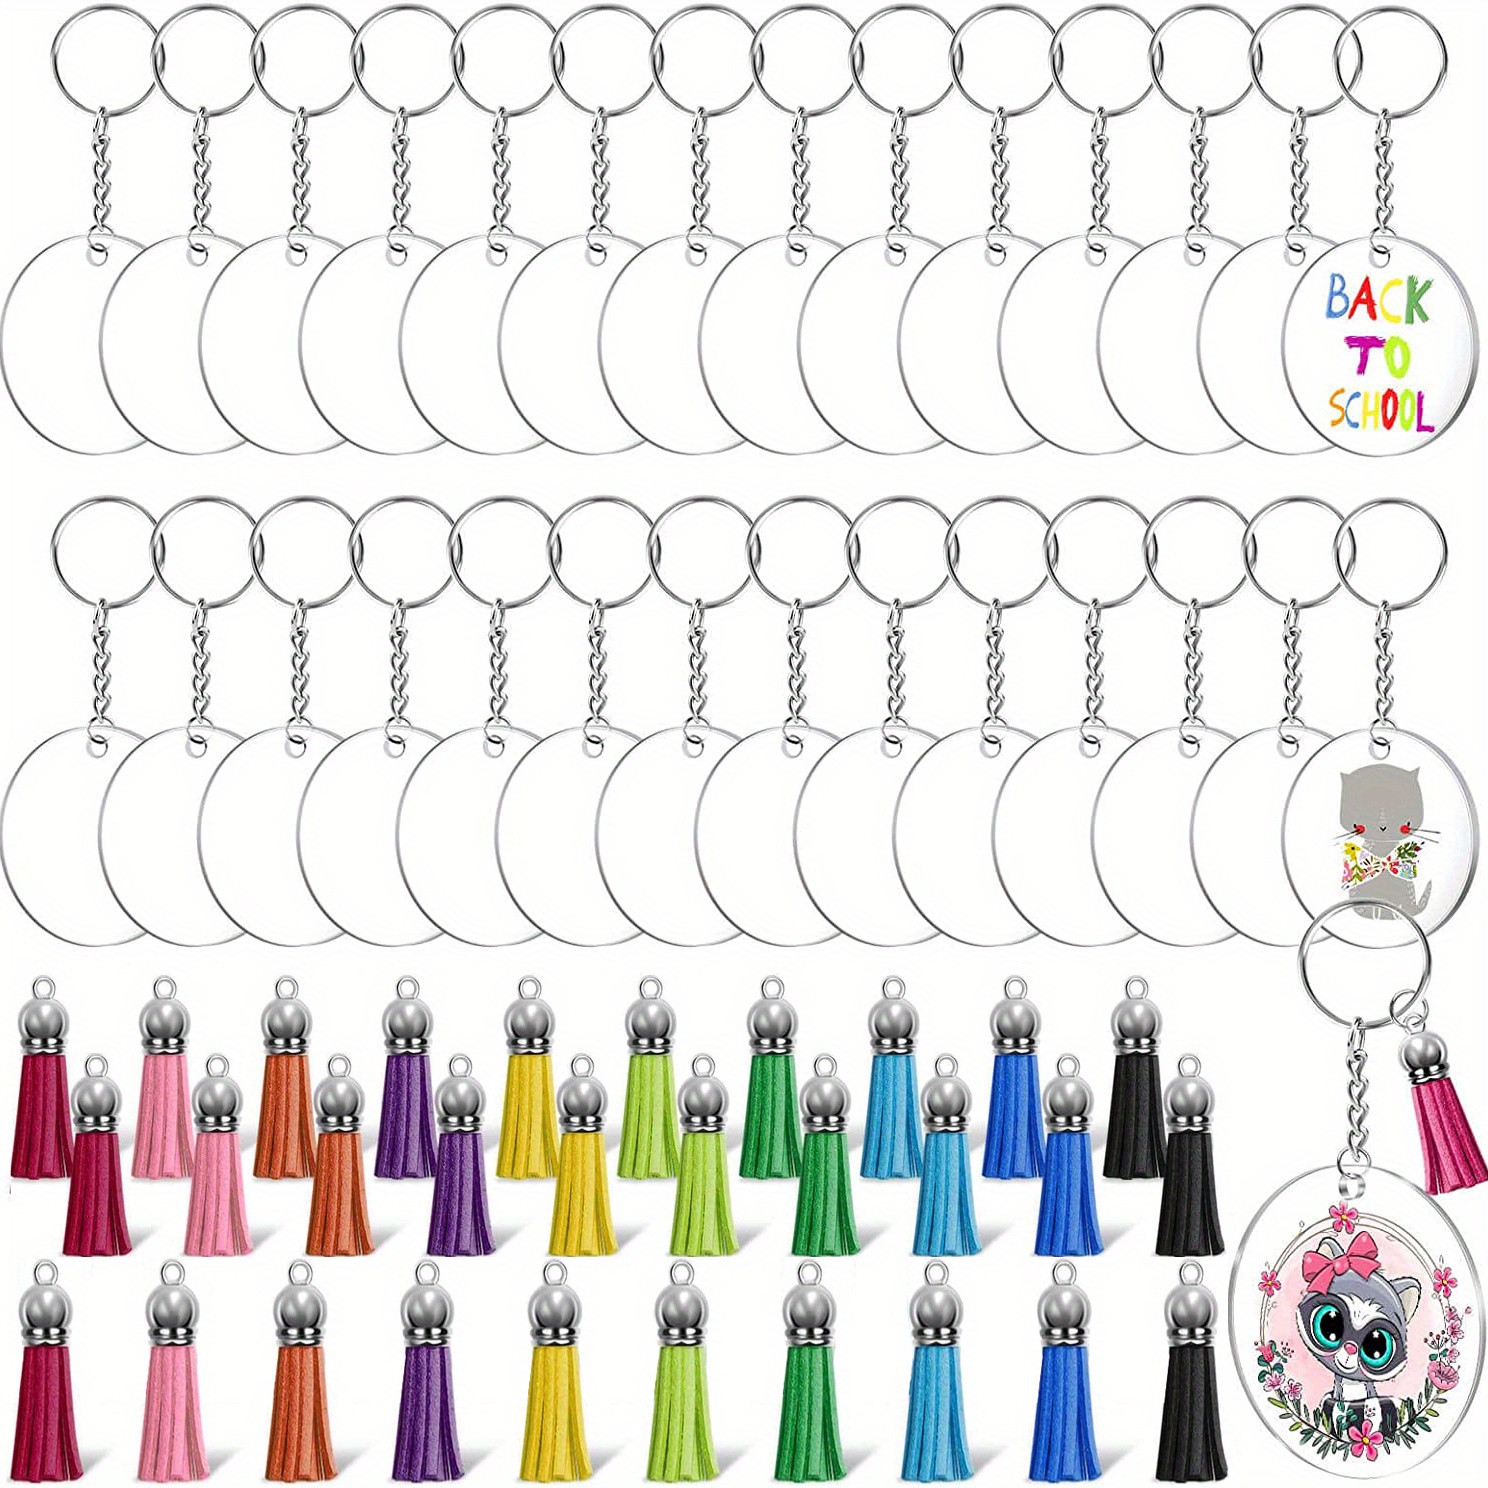 Xelparuc Clear Acrylic Keychain Blanks for Vinyl 120 Pcs Including 30pcs Acrylic Circle Discs,30pcs Keychain Tassels, 30pcs Key Chain Rings and 30pcs